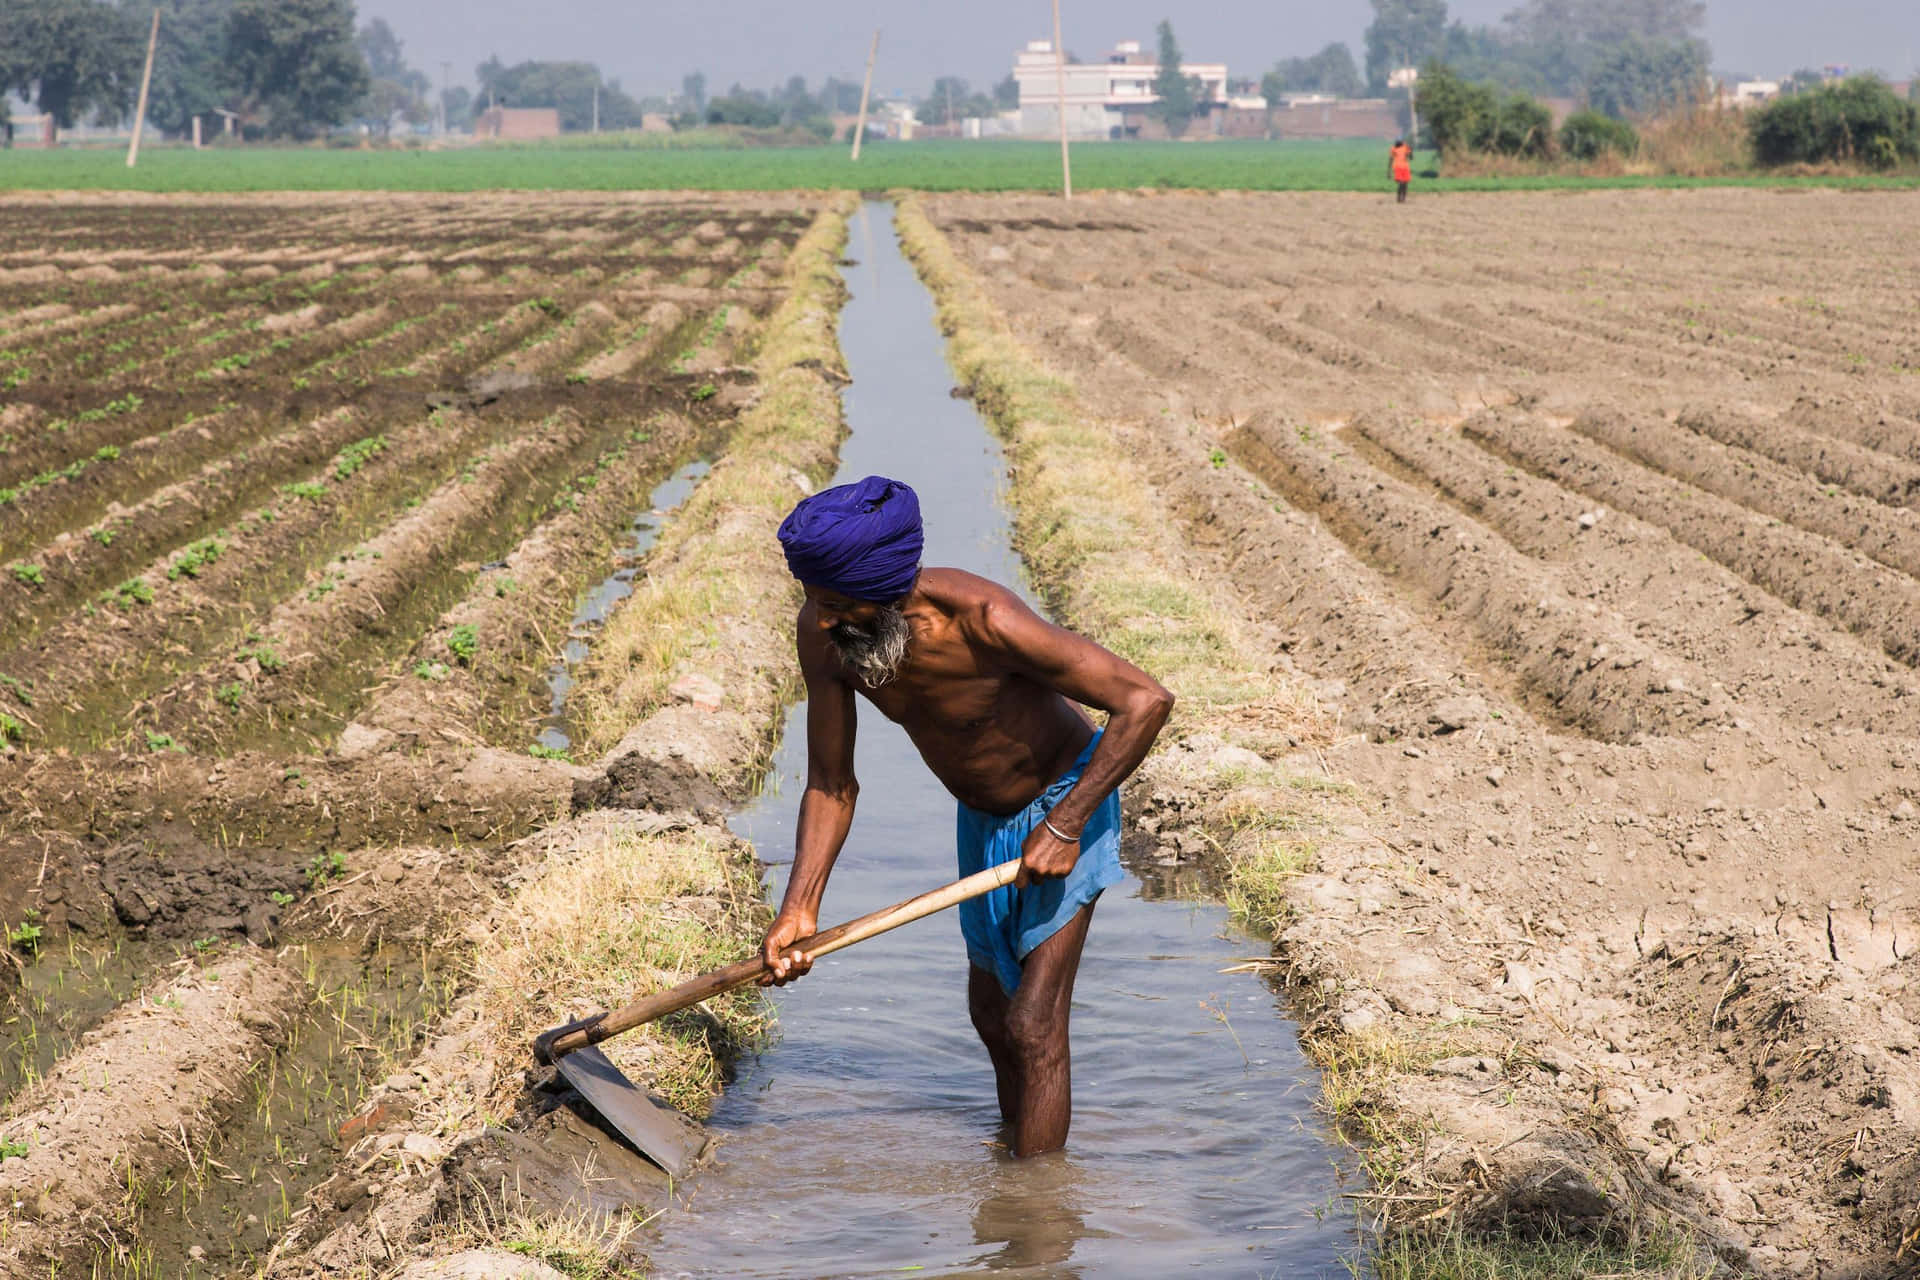 Hardworking Farmer amidst the Serene Landscape